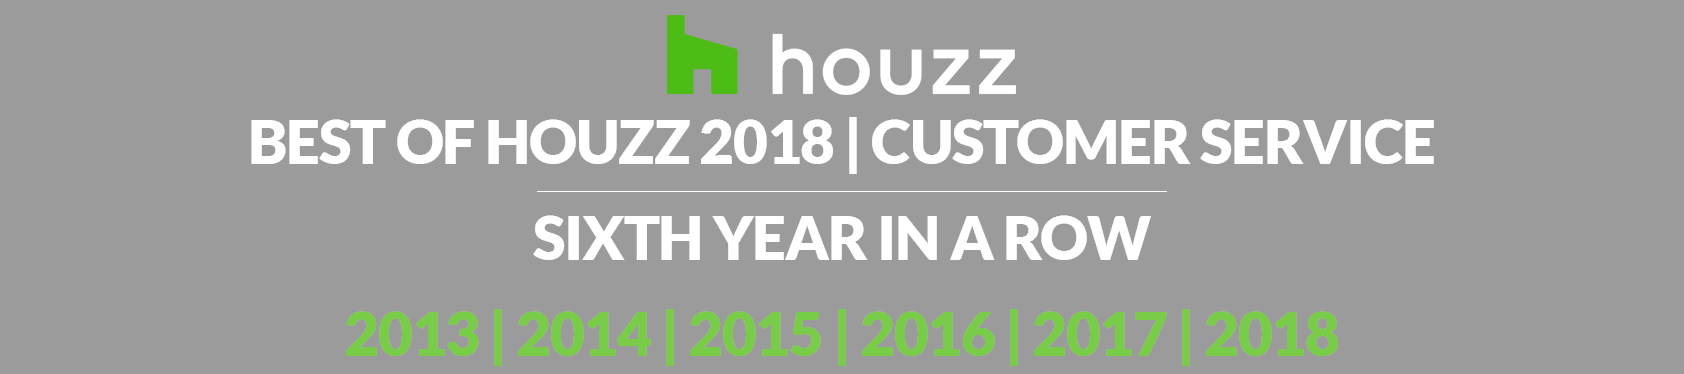 houzz customer service horrible